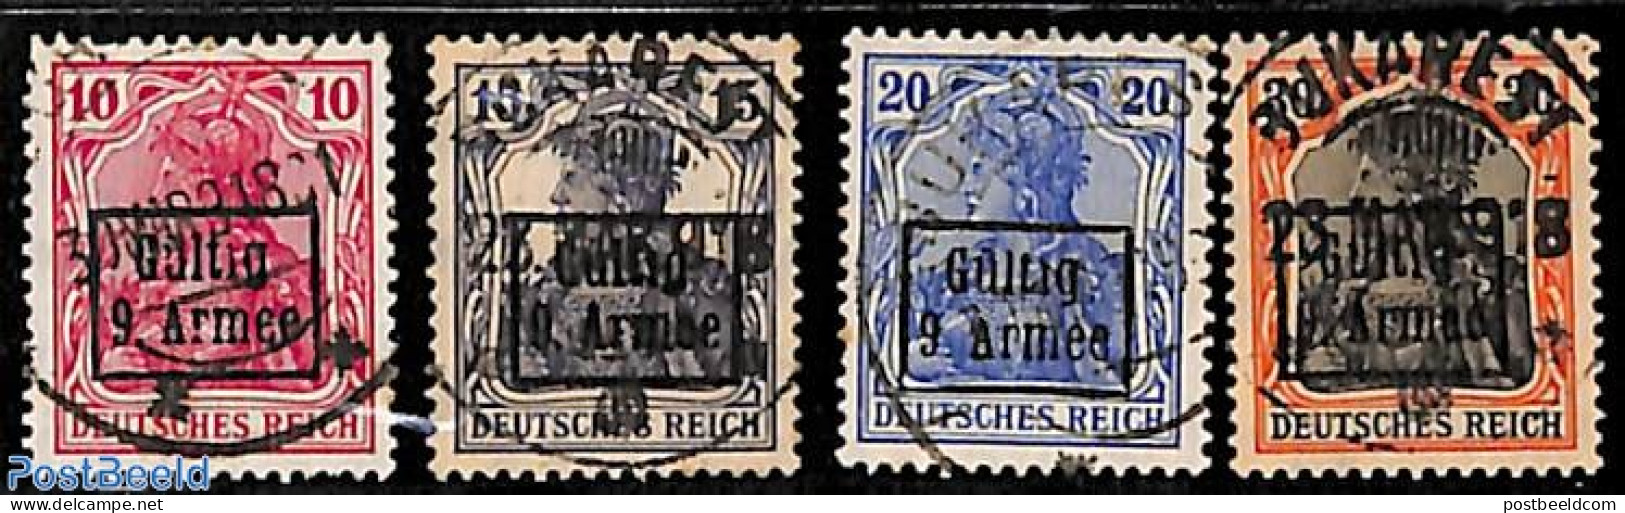 Romania 1918 Gültig 9. Armee Overprints 4v, Used Stamps - Used Stamps